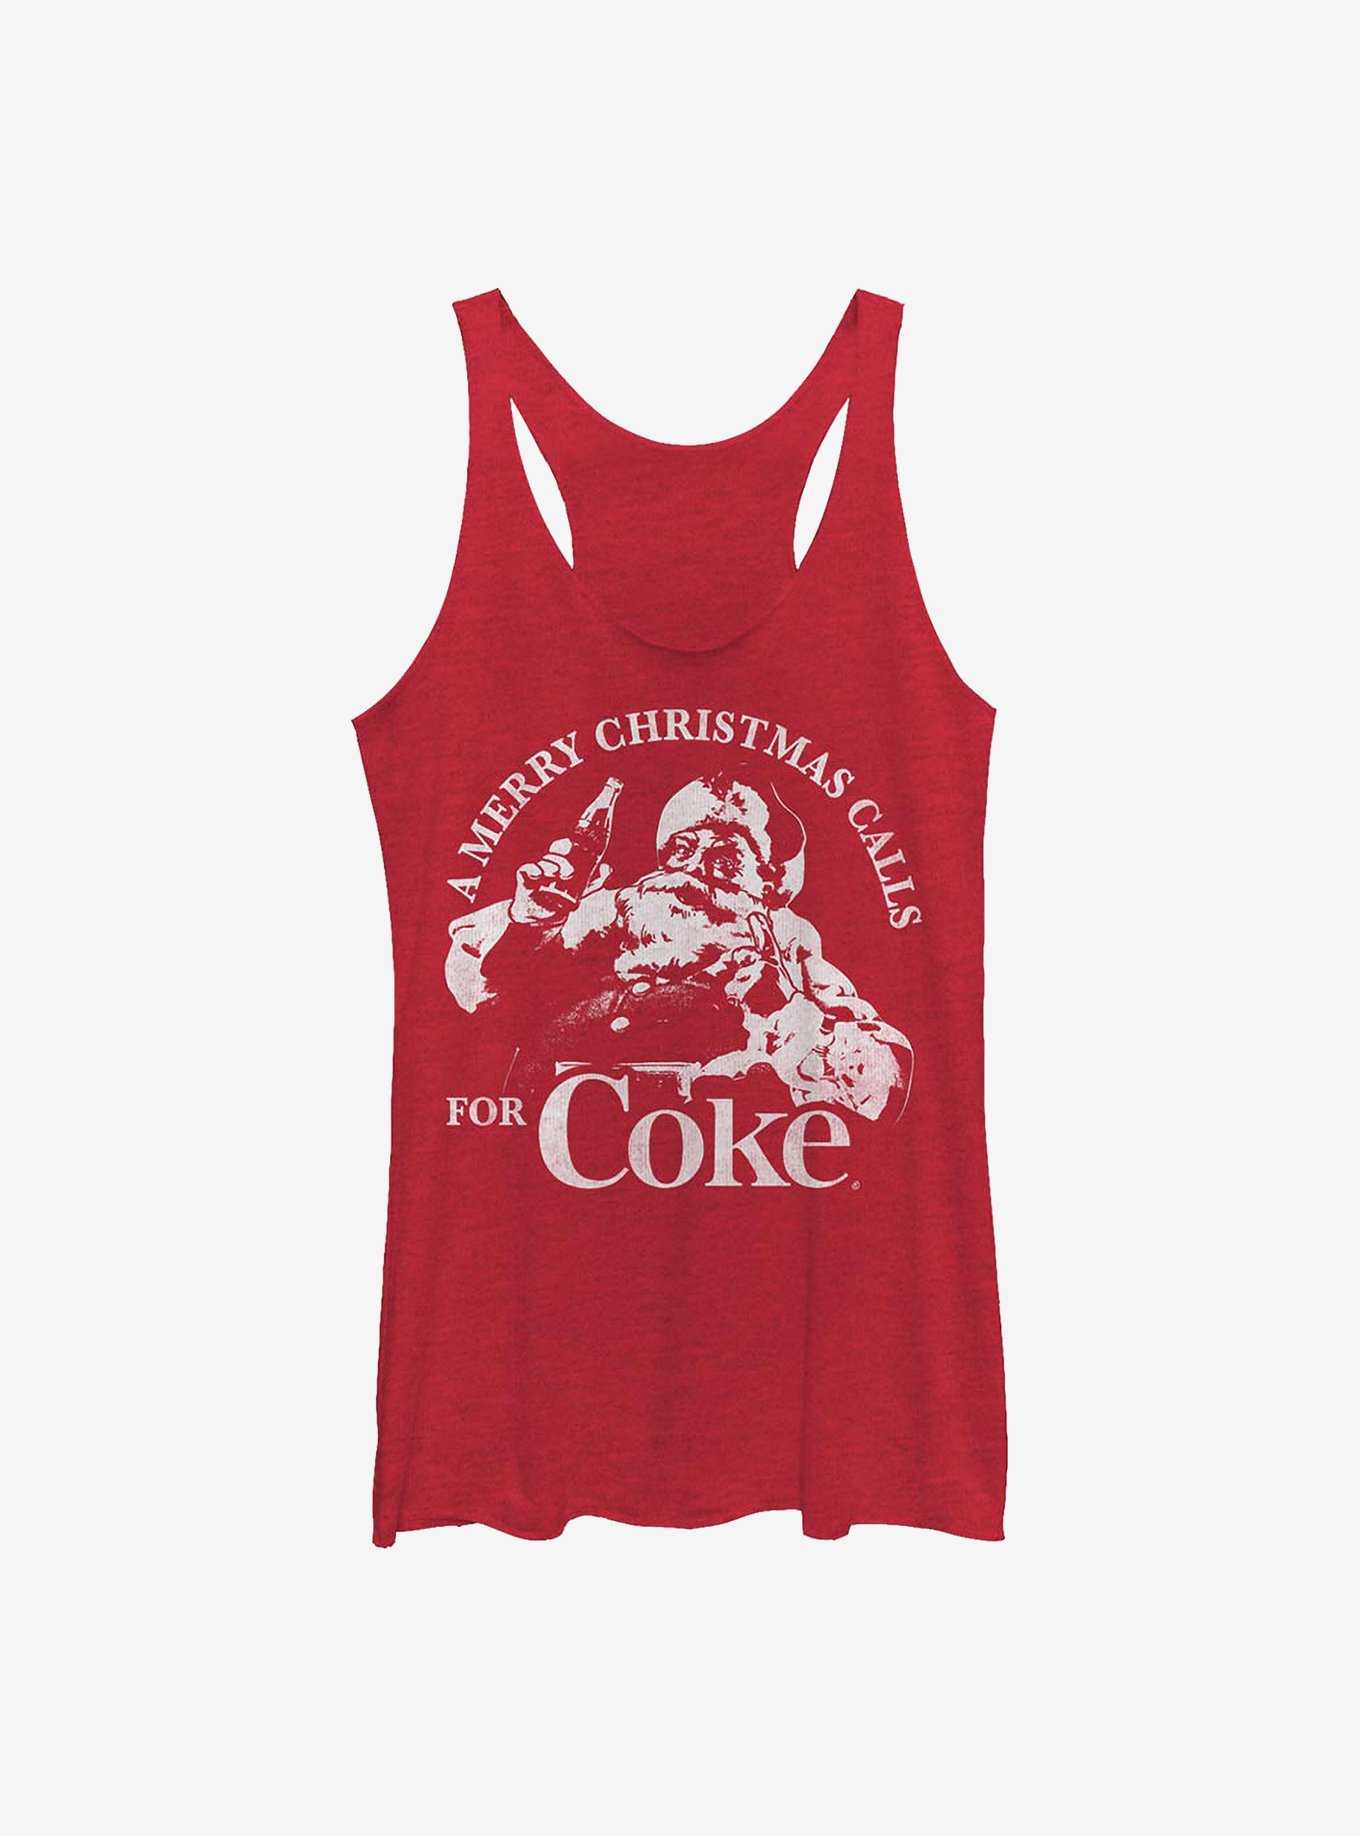 Coke A Merry Christmas Calls For Coke Girls Tank, , hi-res